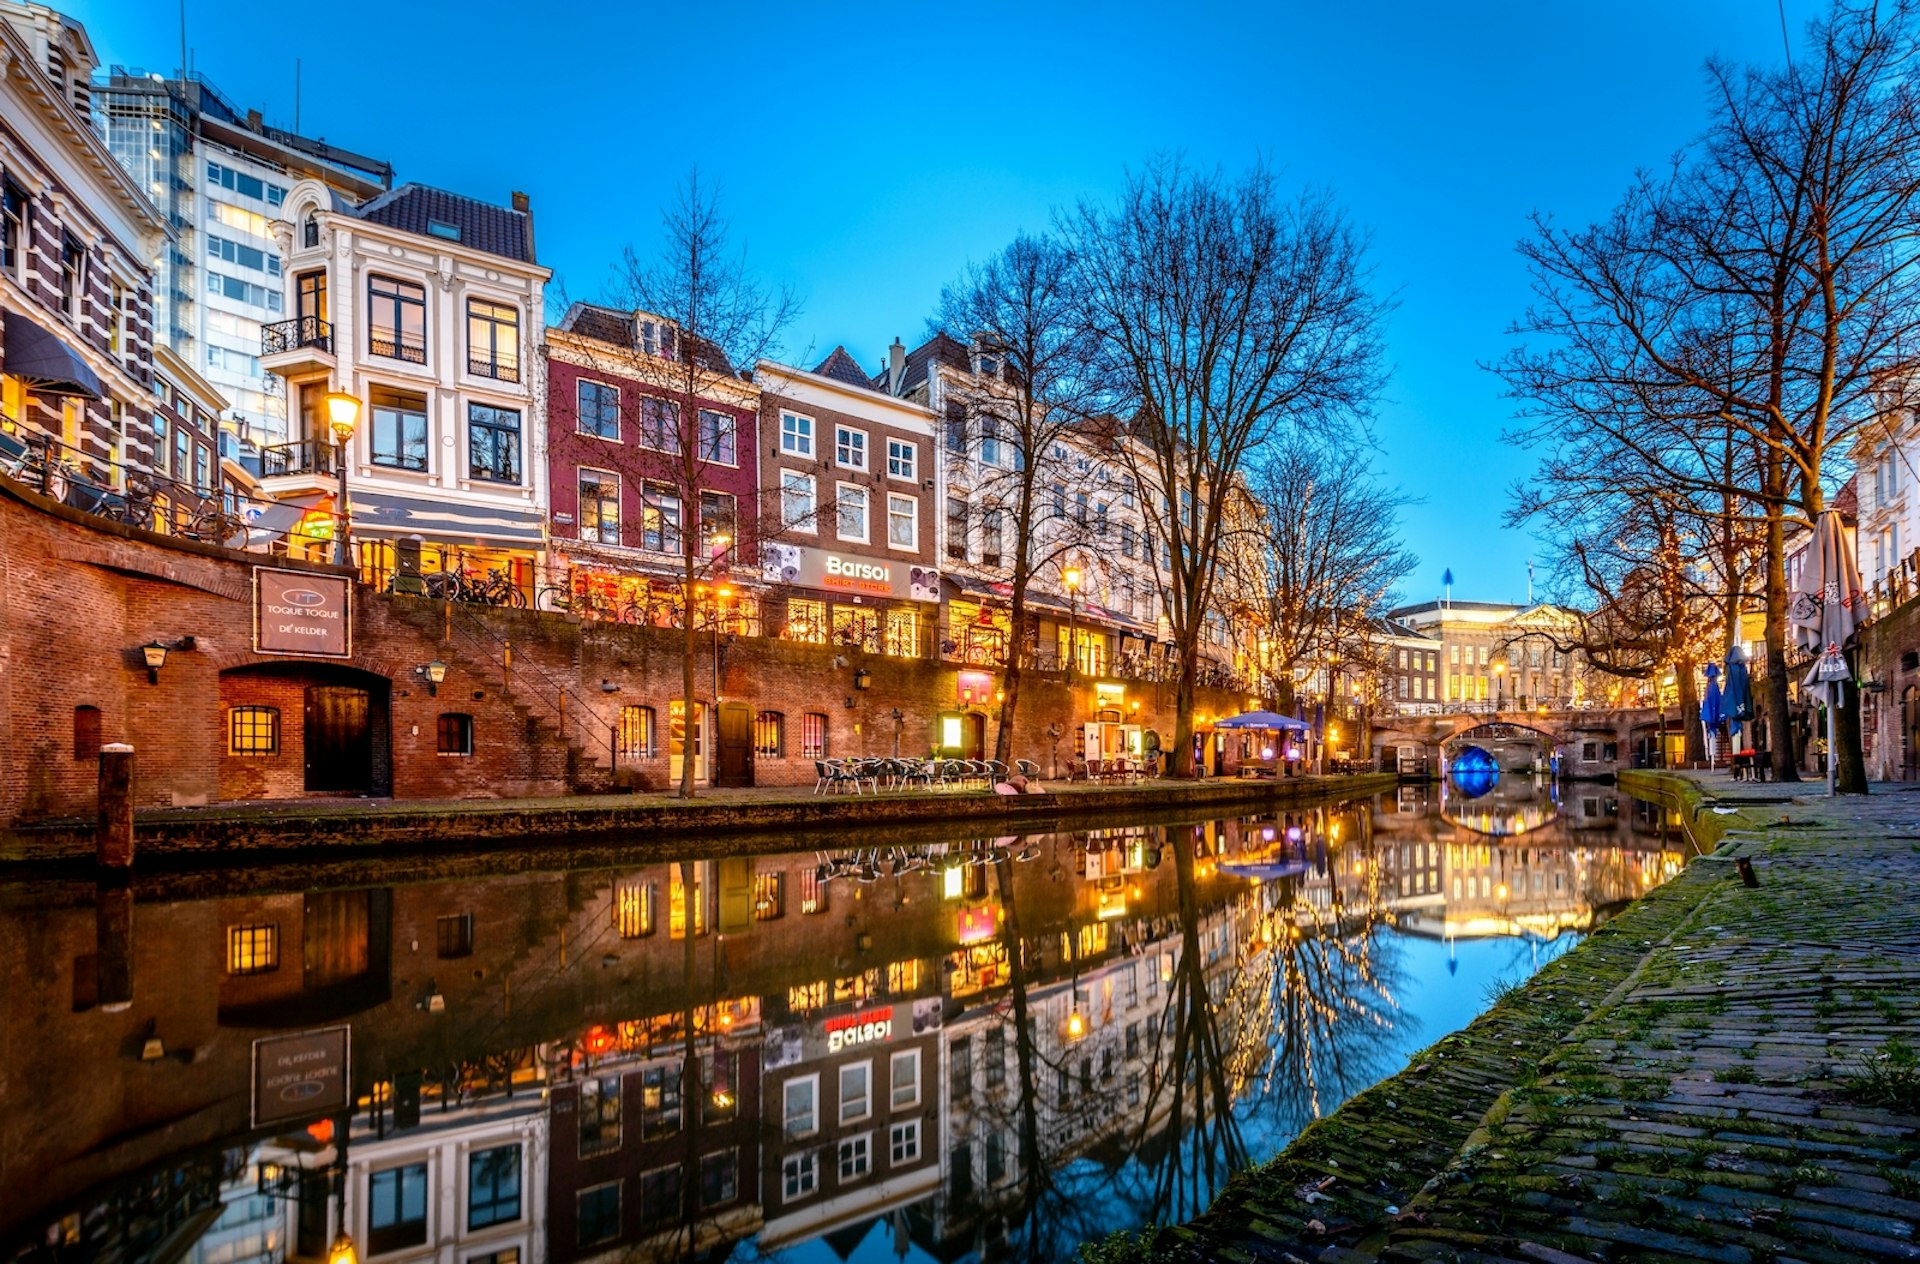 The canalside in Utrecht is lit up at dusk; Copenhagen alternatives